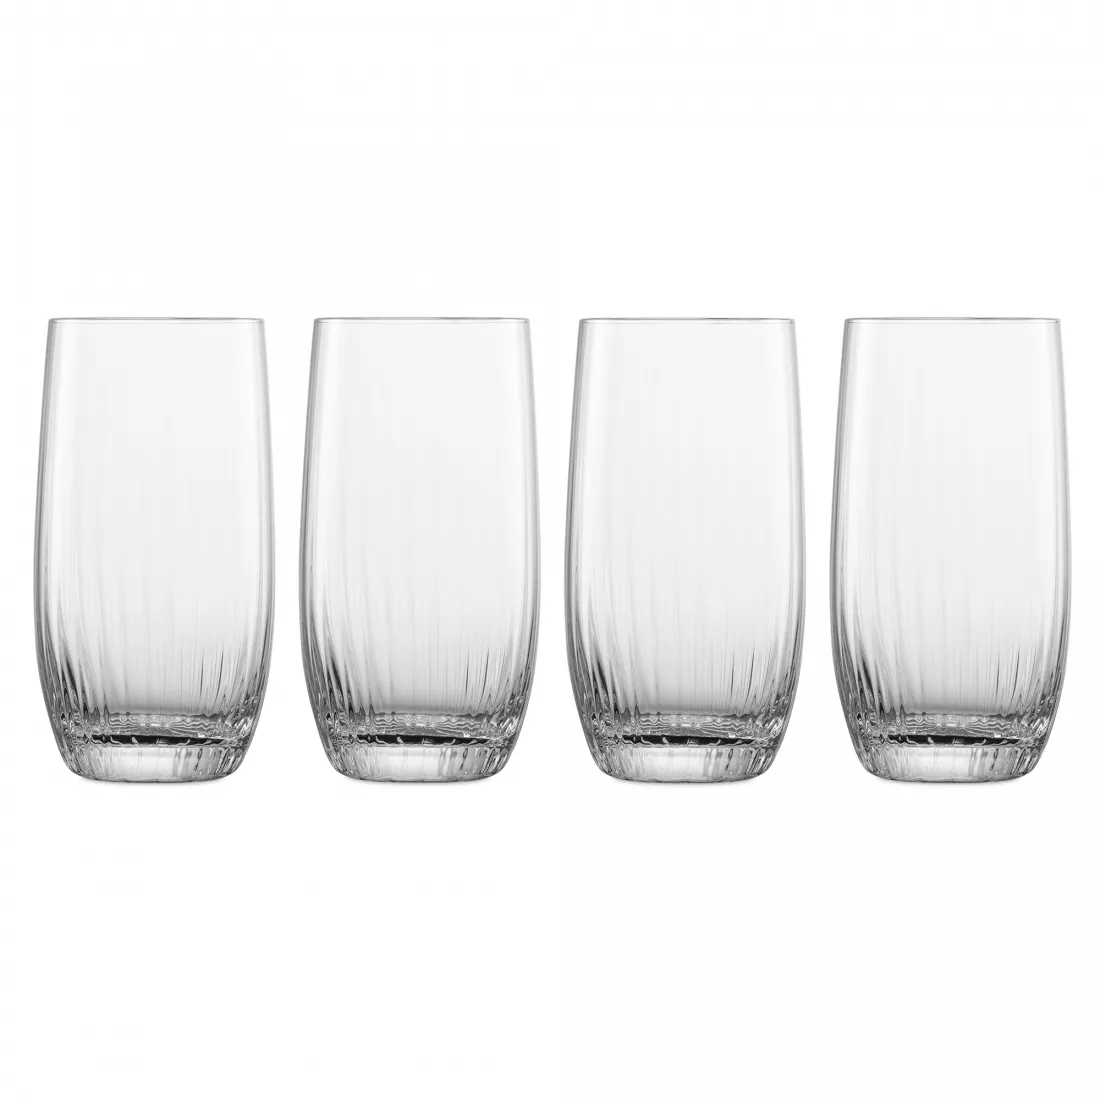 ZWIESEL GLAS Набор стаканов для коктейля, объем 499 мл, 4 шт, серия Fortune